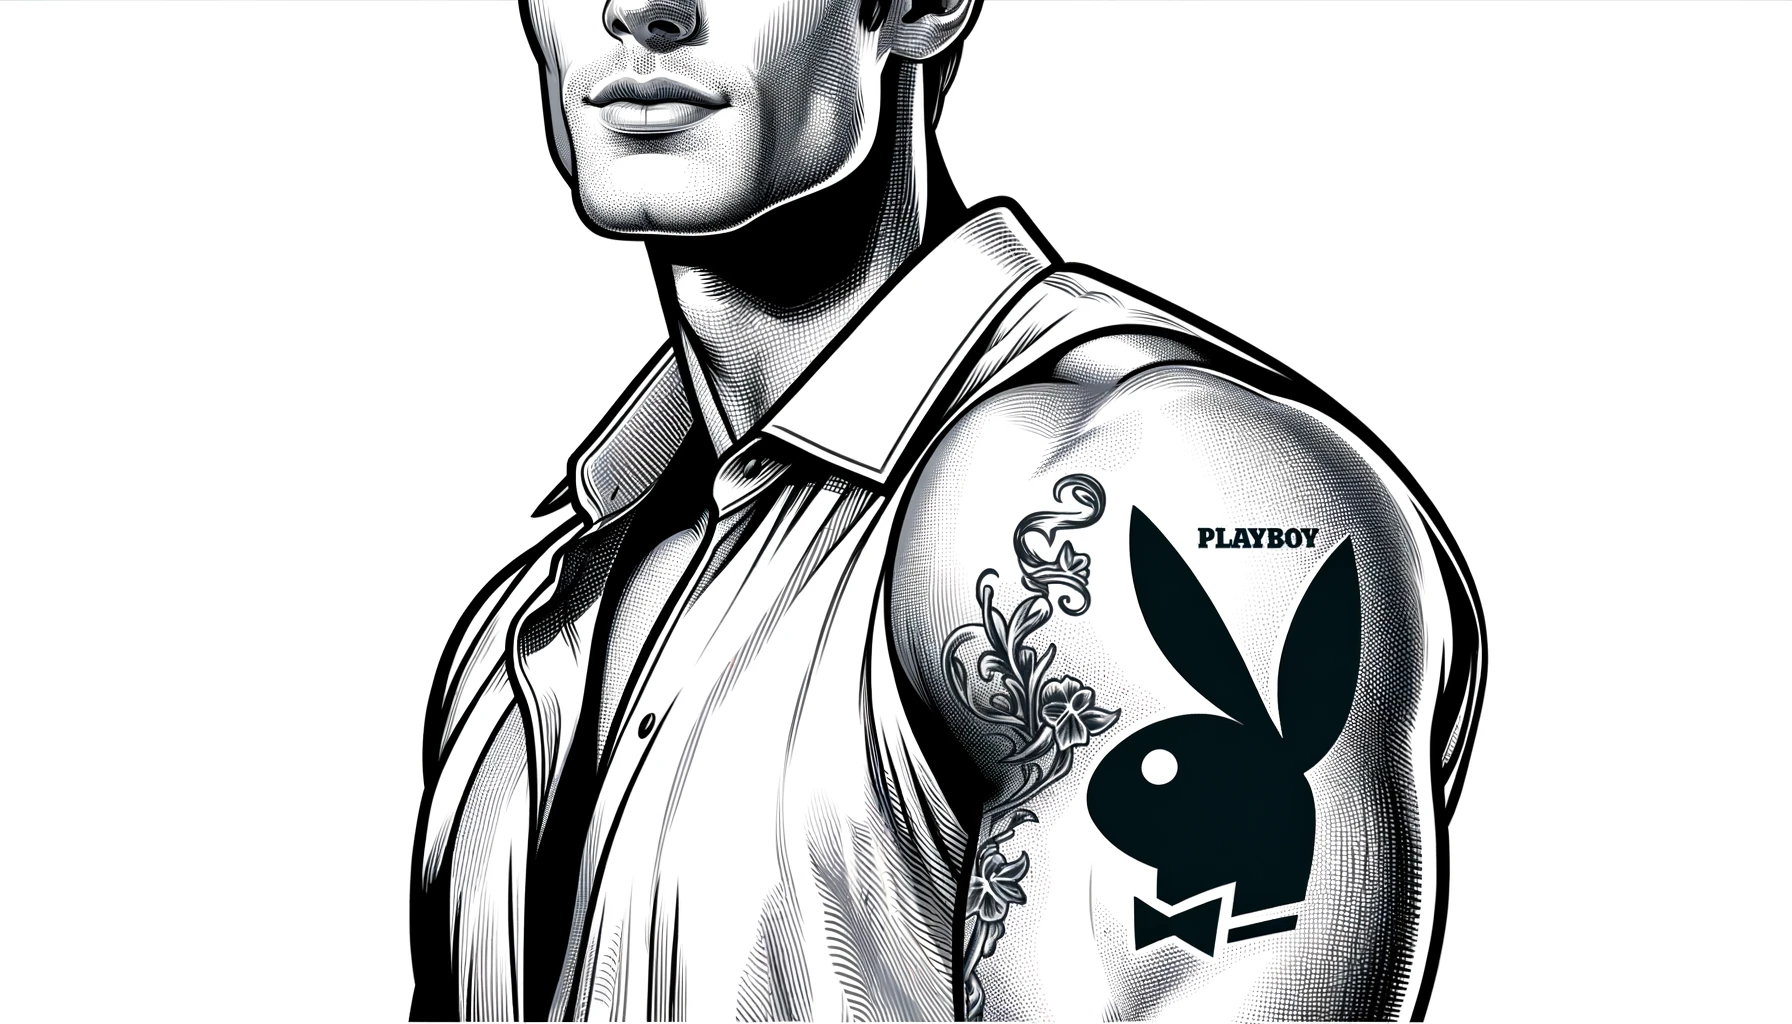 Playboy tattoo on a guy's upper arm